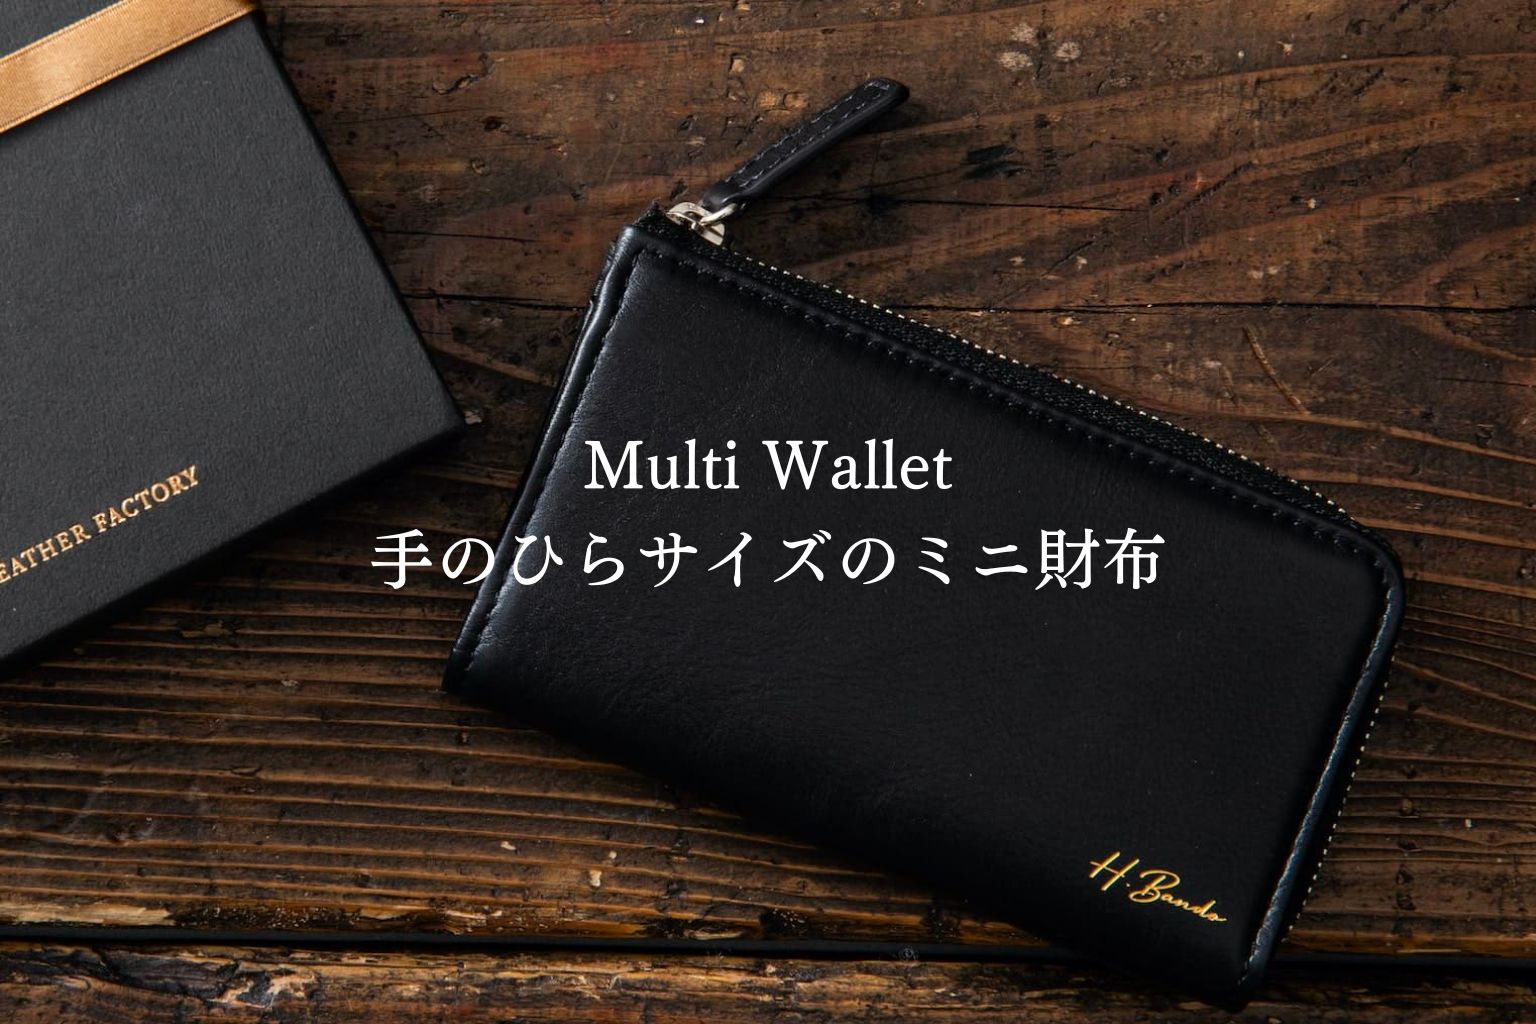 Multi Wallet 手のひらサイズのミニ財布